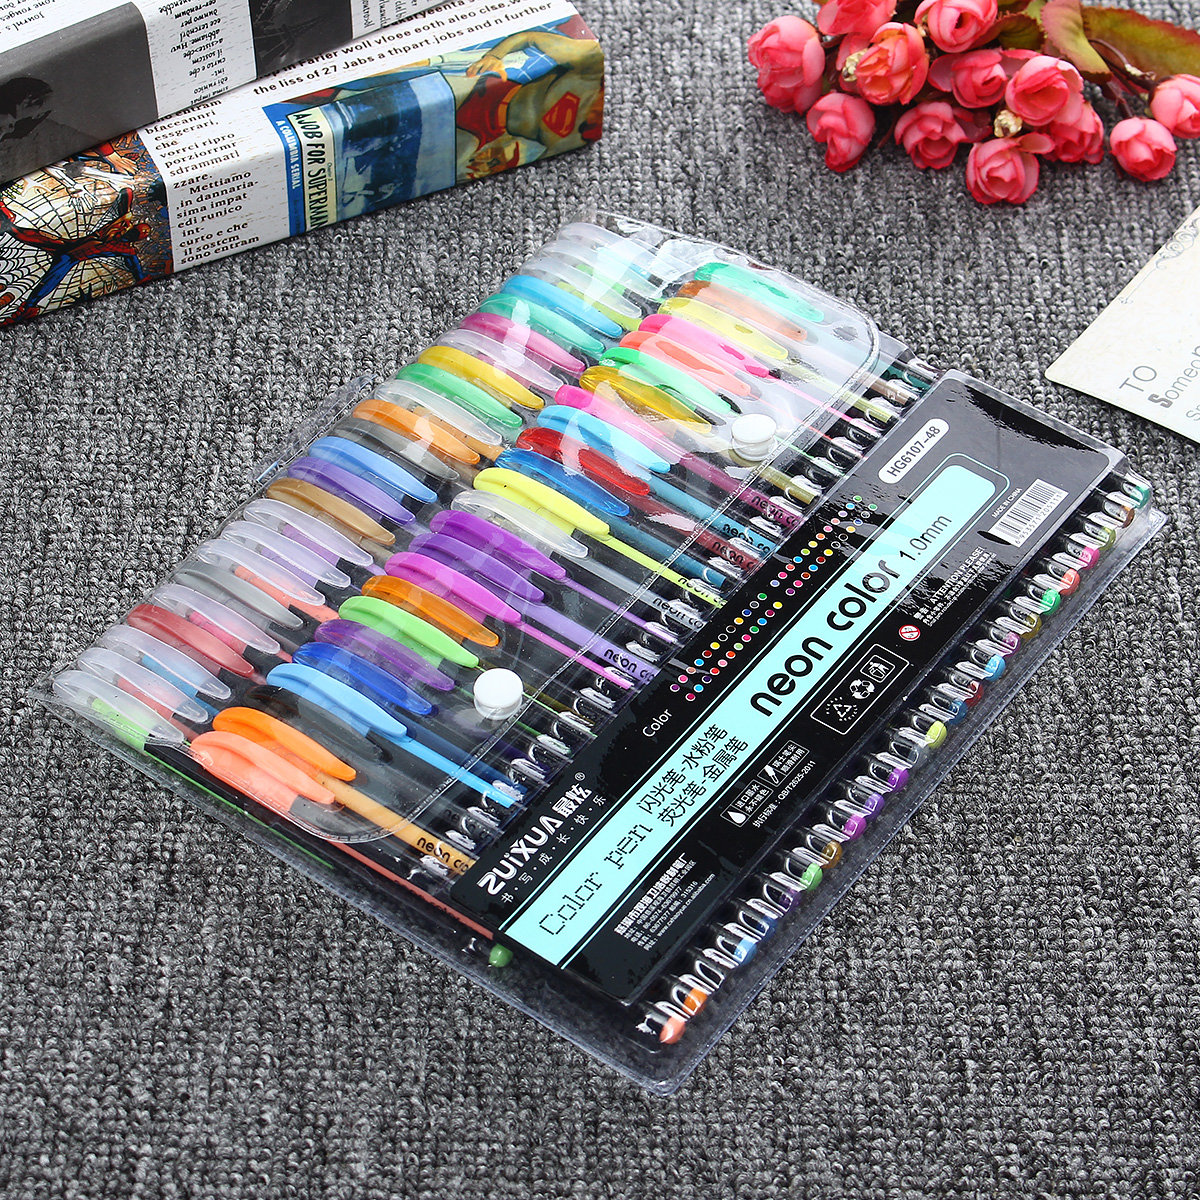 48 pcs Multicolor Gel Pen Set Adult Coloring Book Ink Pens Drawing Painting Writing Craft Art